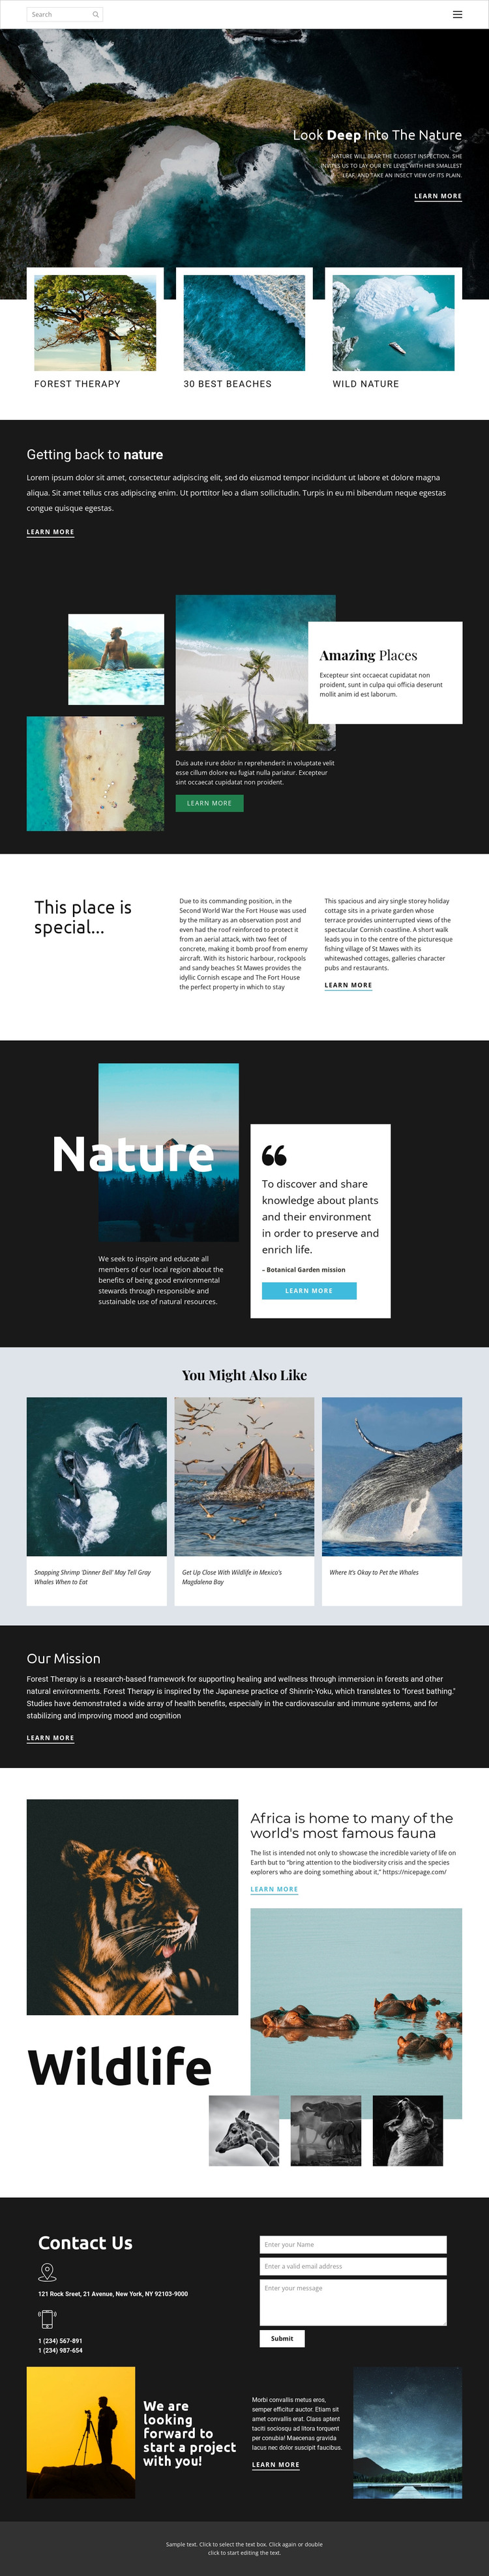 Exploring wildlife and nature Web Design